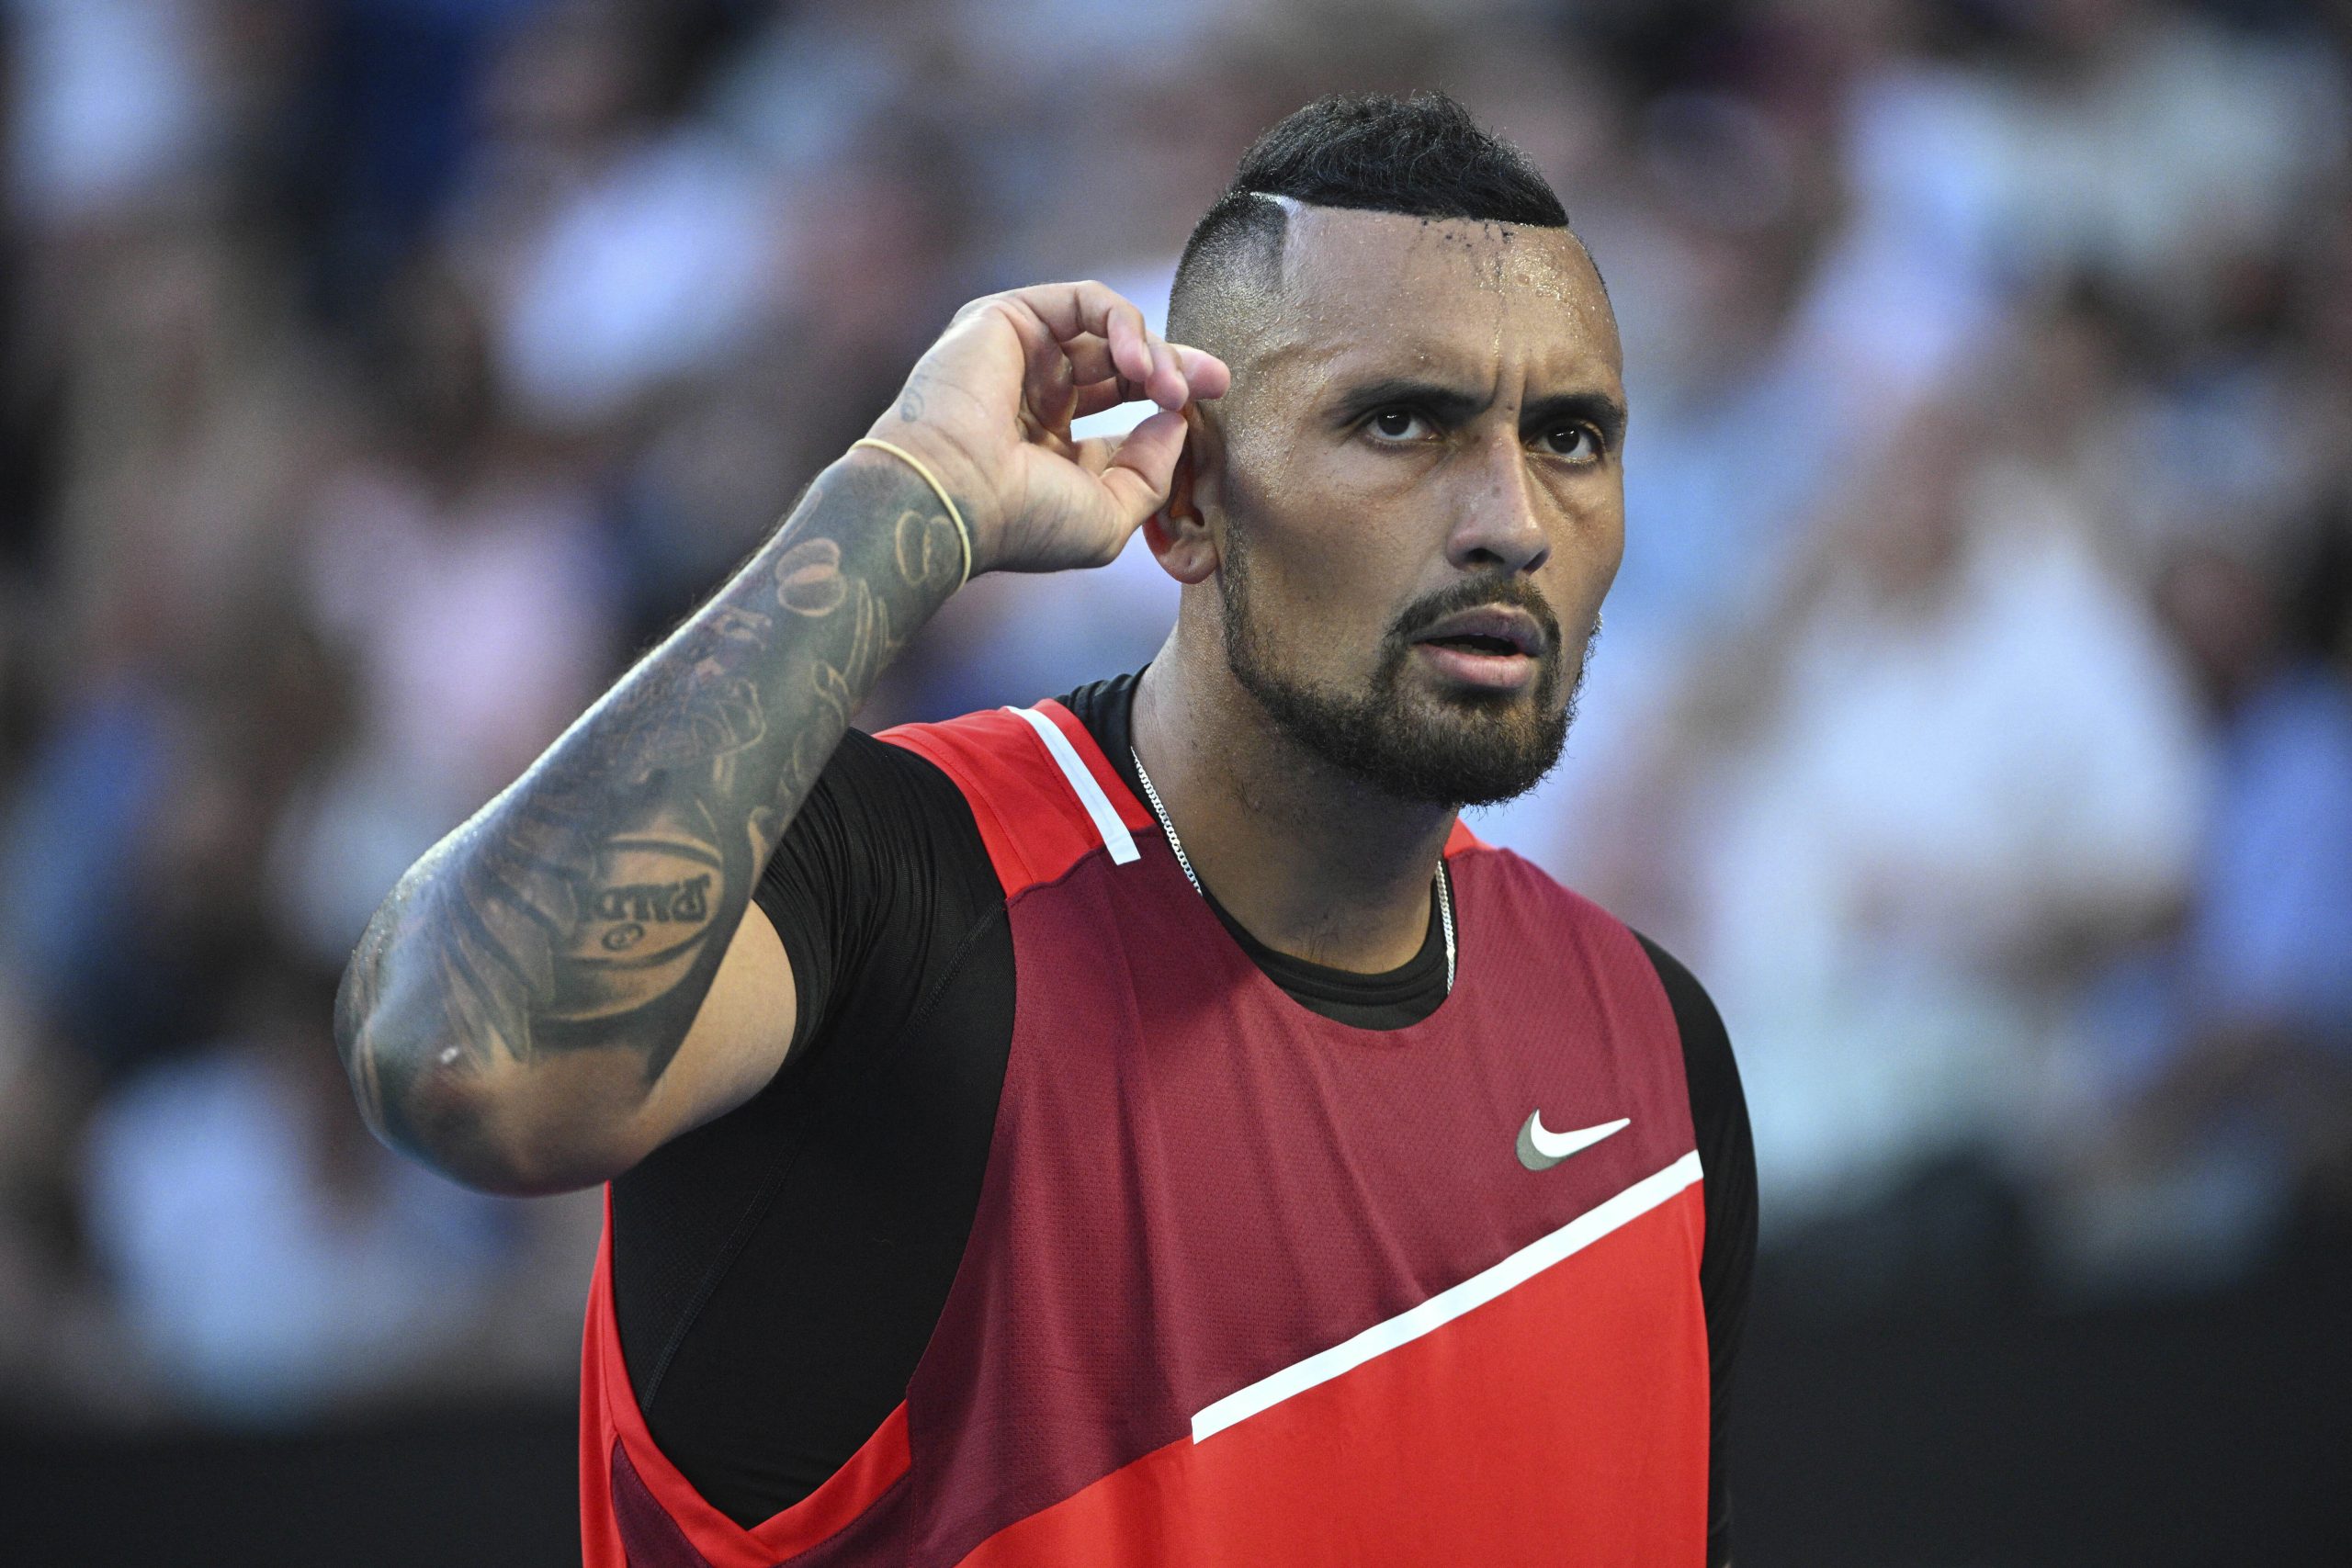 Nick Kyrgios joins Djokovic in slamming player ban at Wimbledon 2022